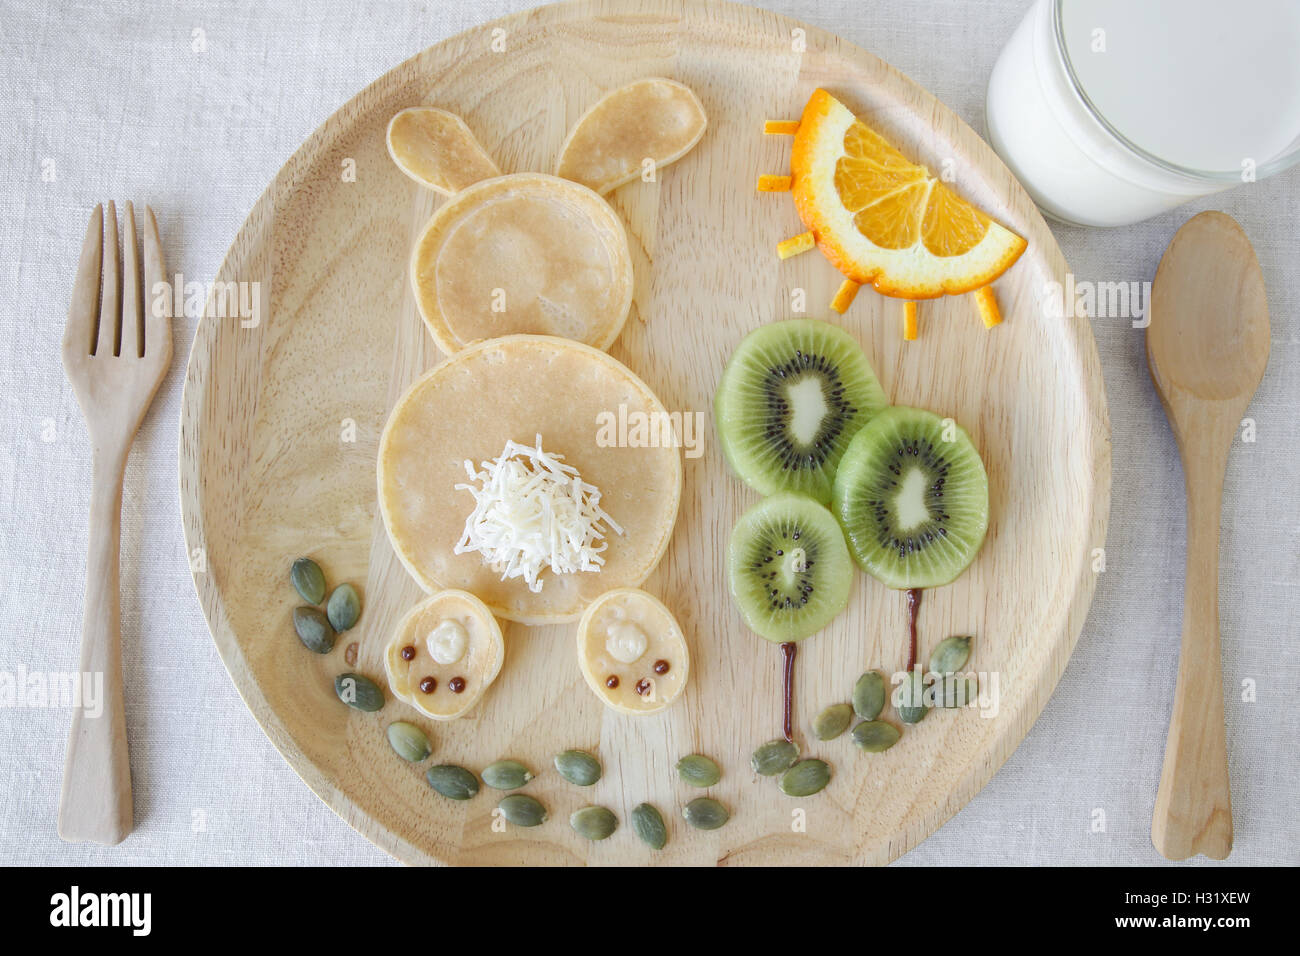 Bunny pancake breakfast, fun food art for kids Stock Photo